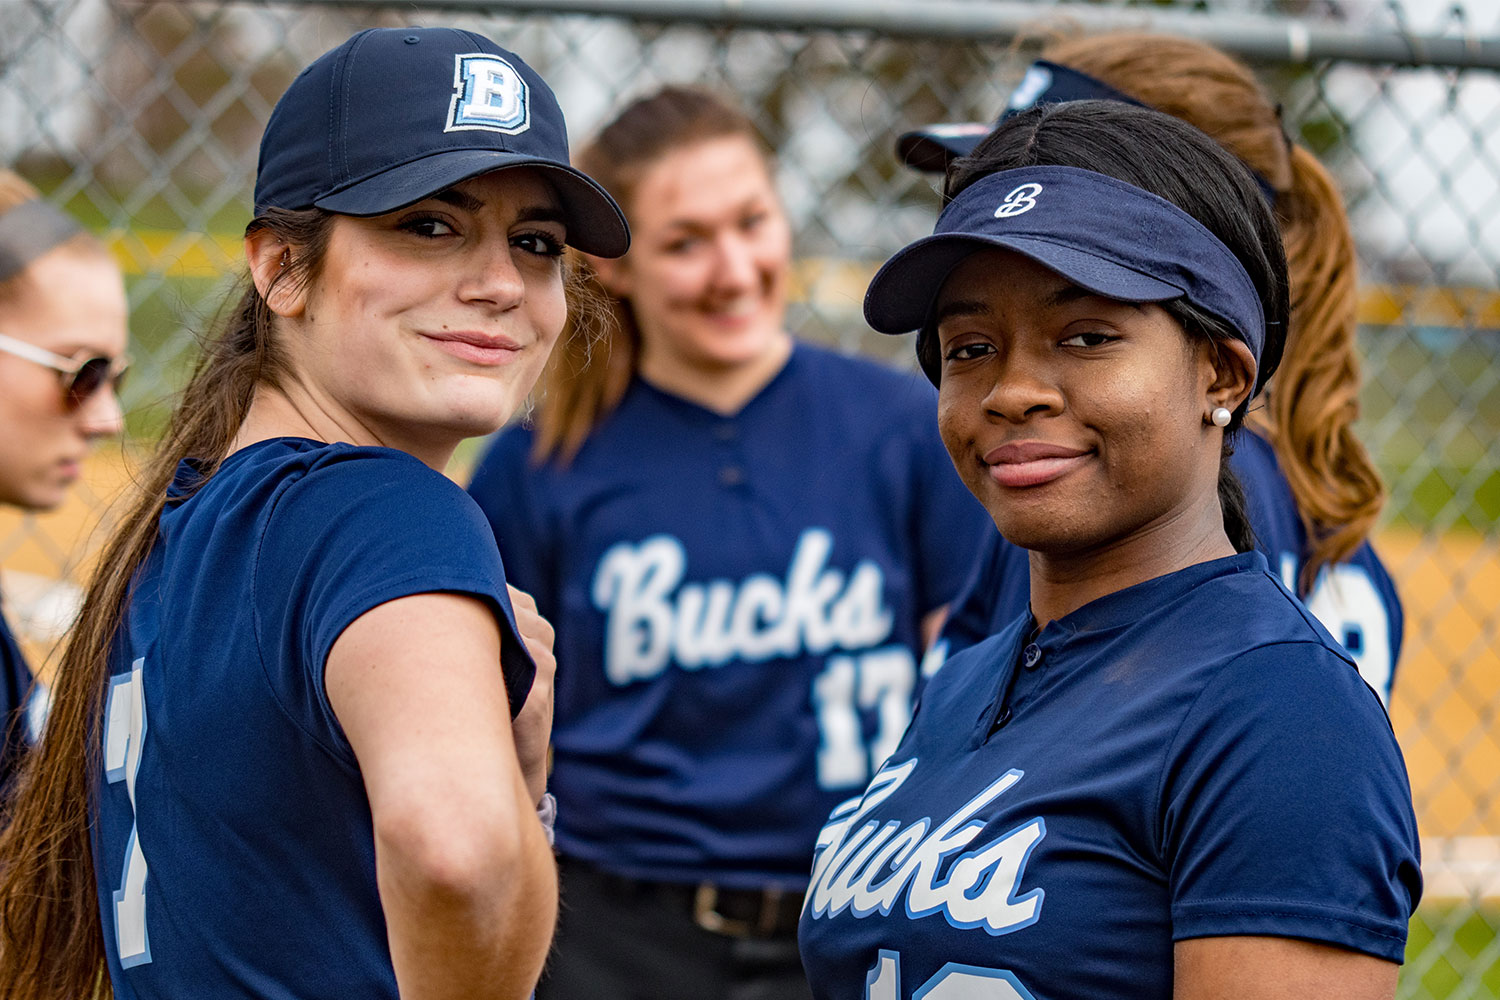 Two female softball players turned towards the camera smirking